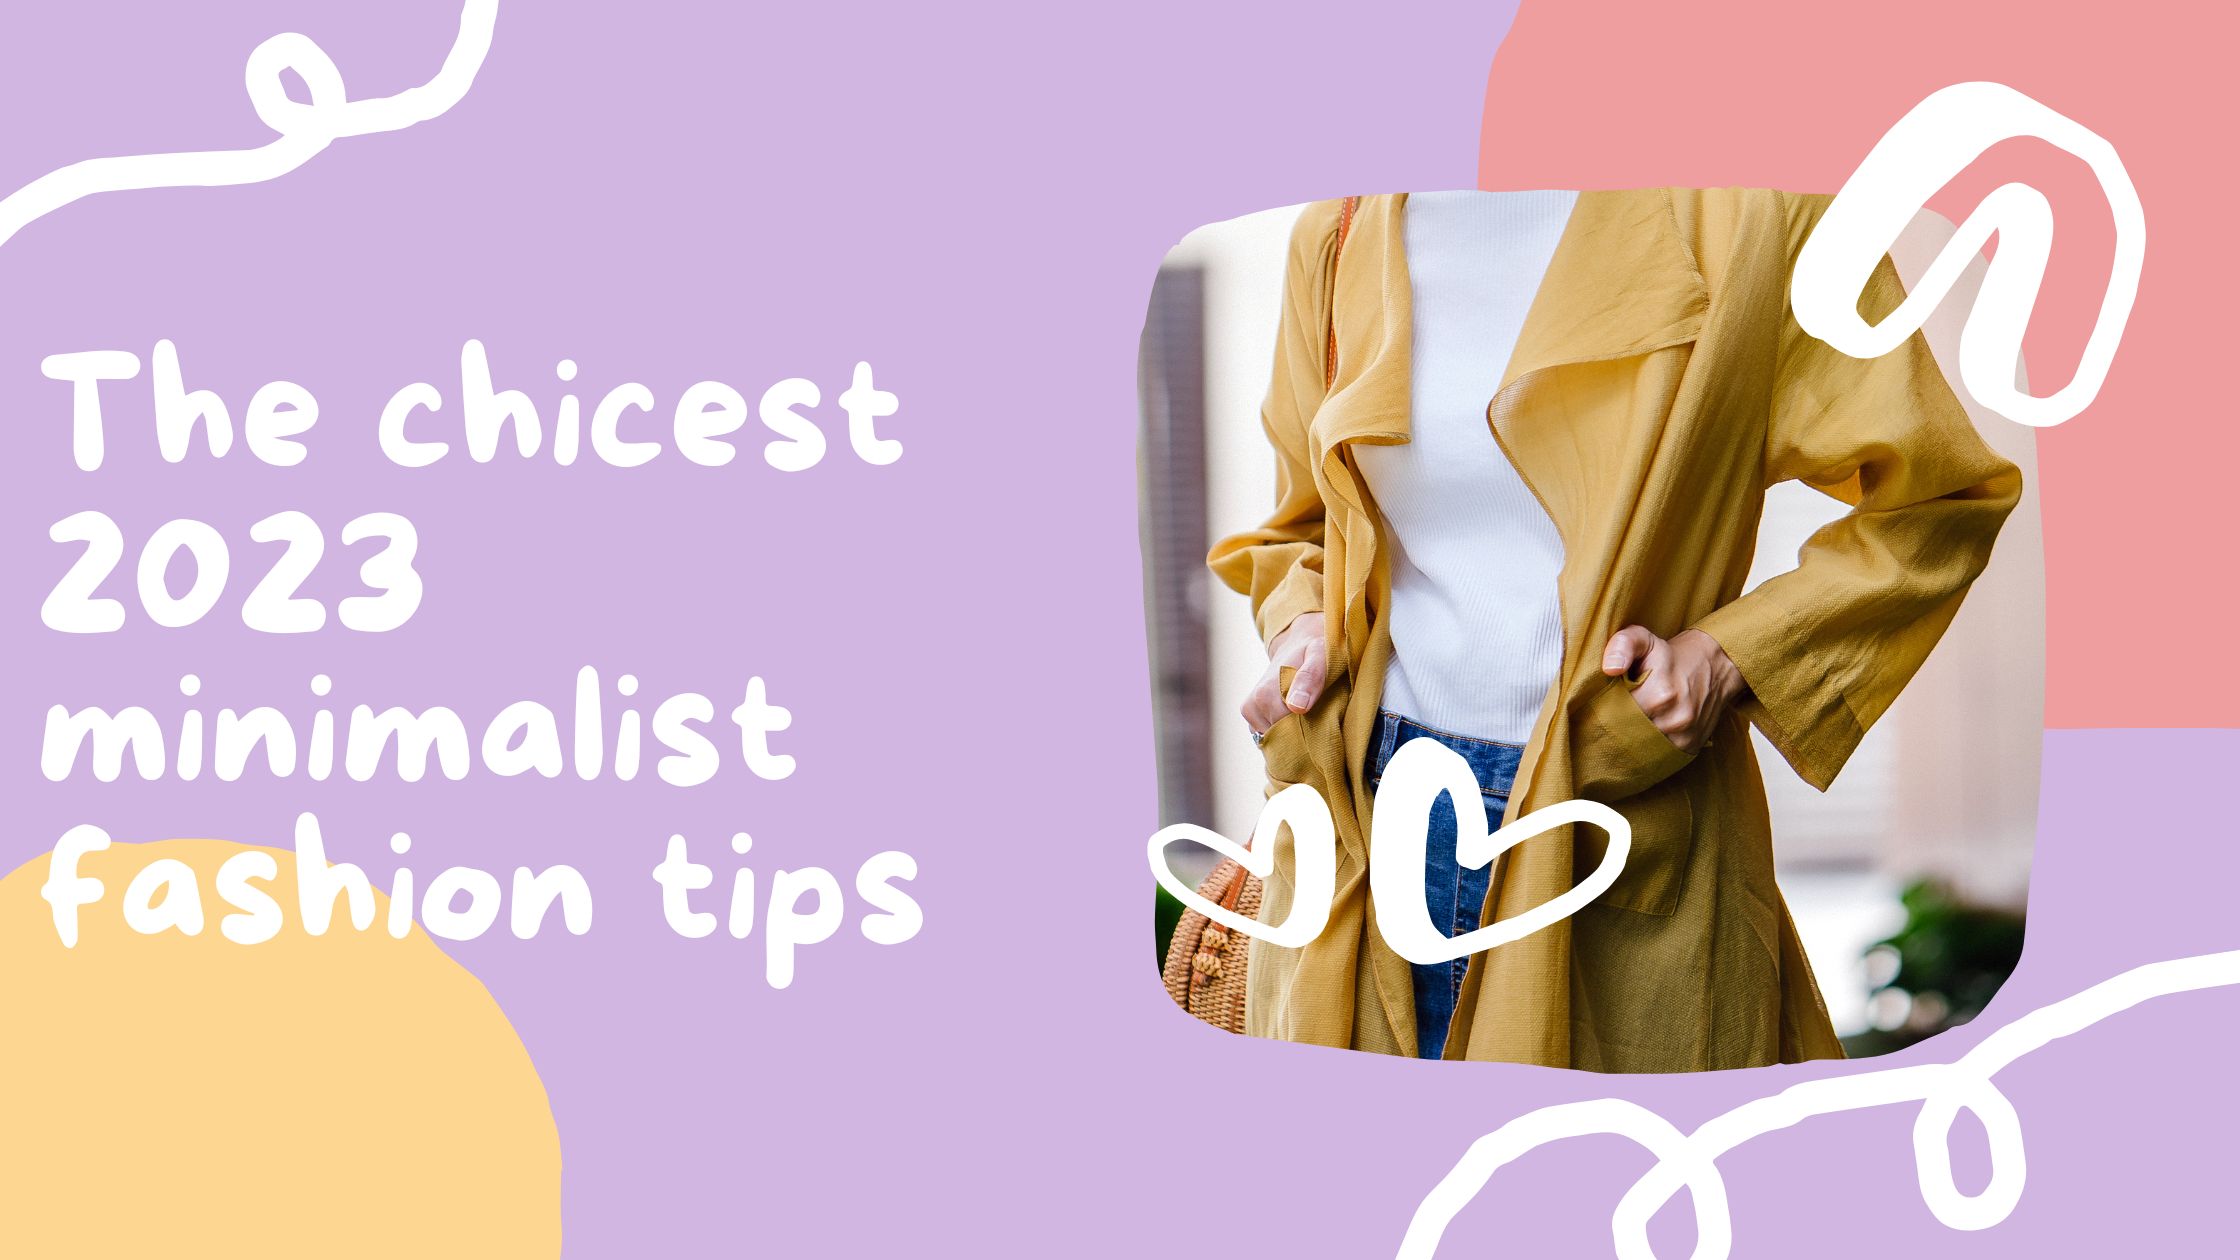 The chicest 2023 minimalist fashion tips